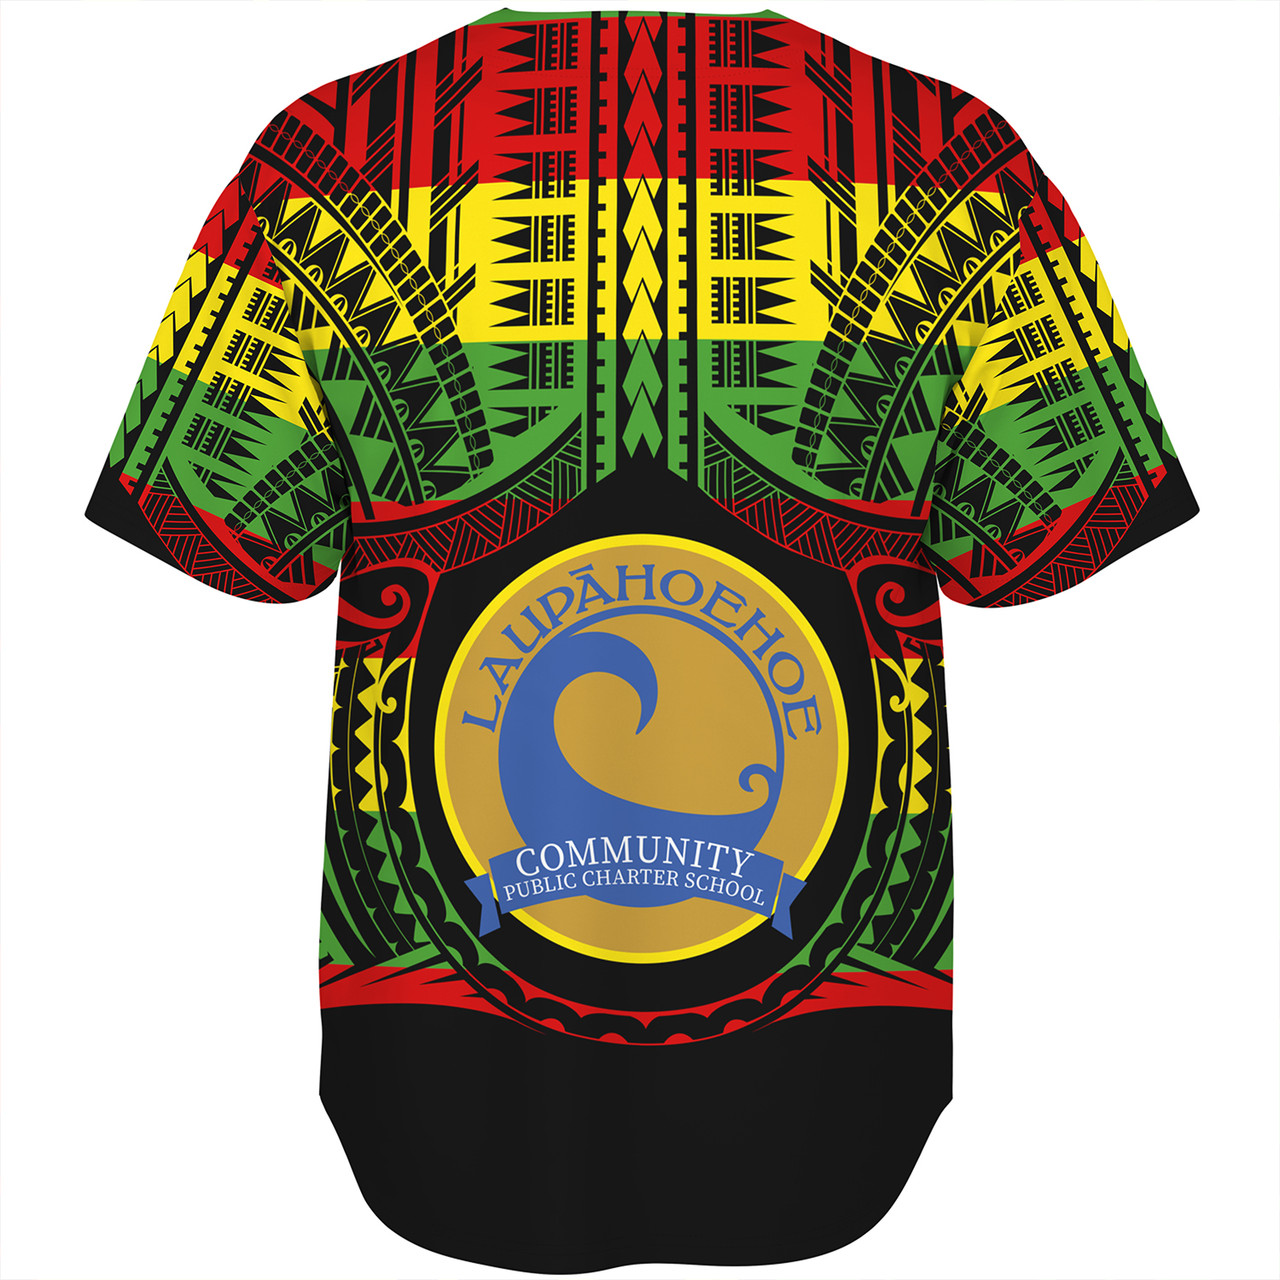 Hawaii Baseball Shirt Laupāhoehoe Community Public Charter School Reggae Color Polynesian